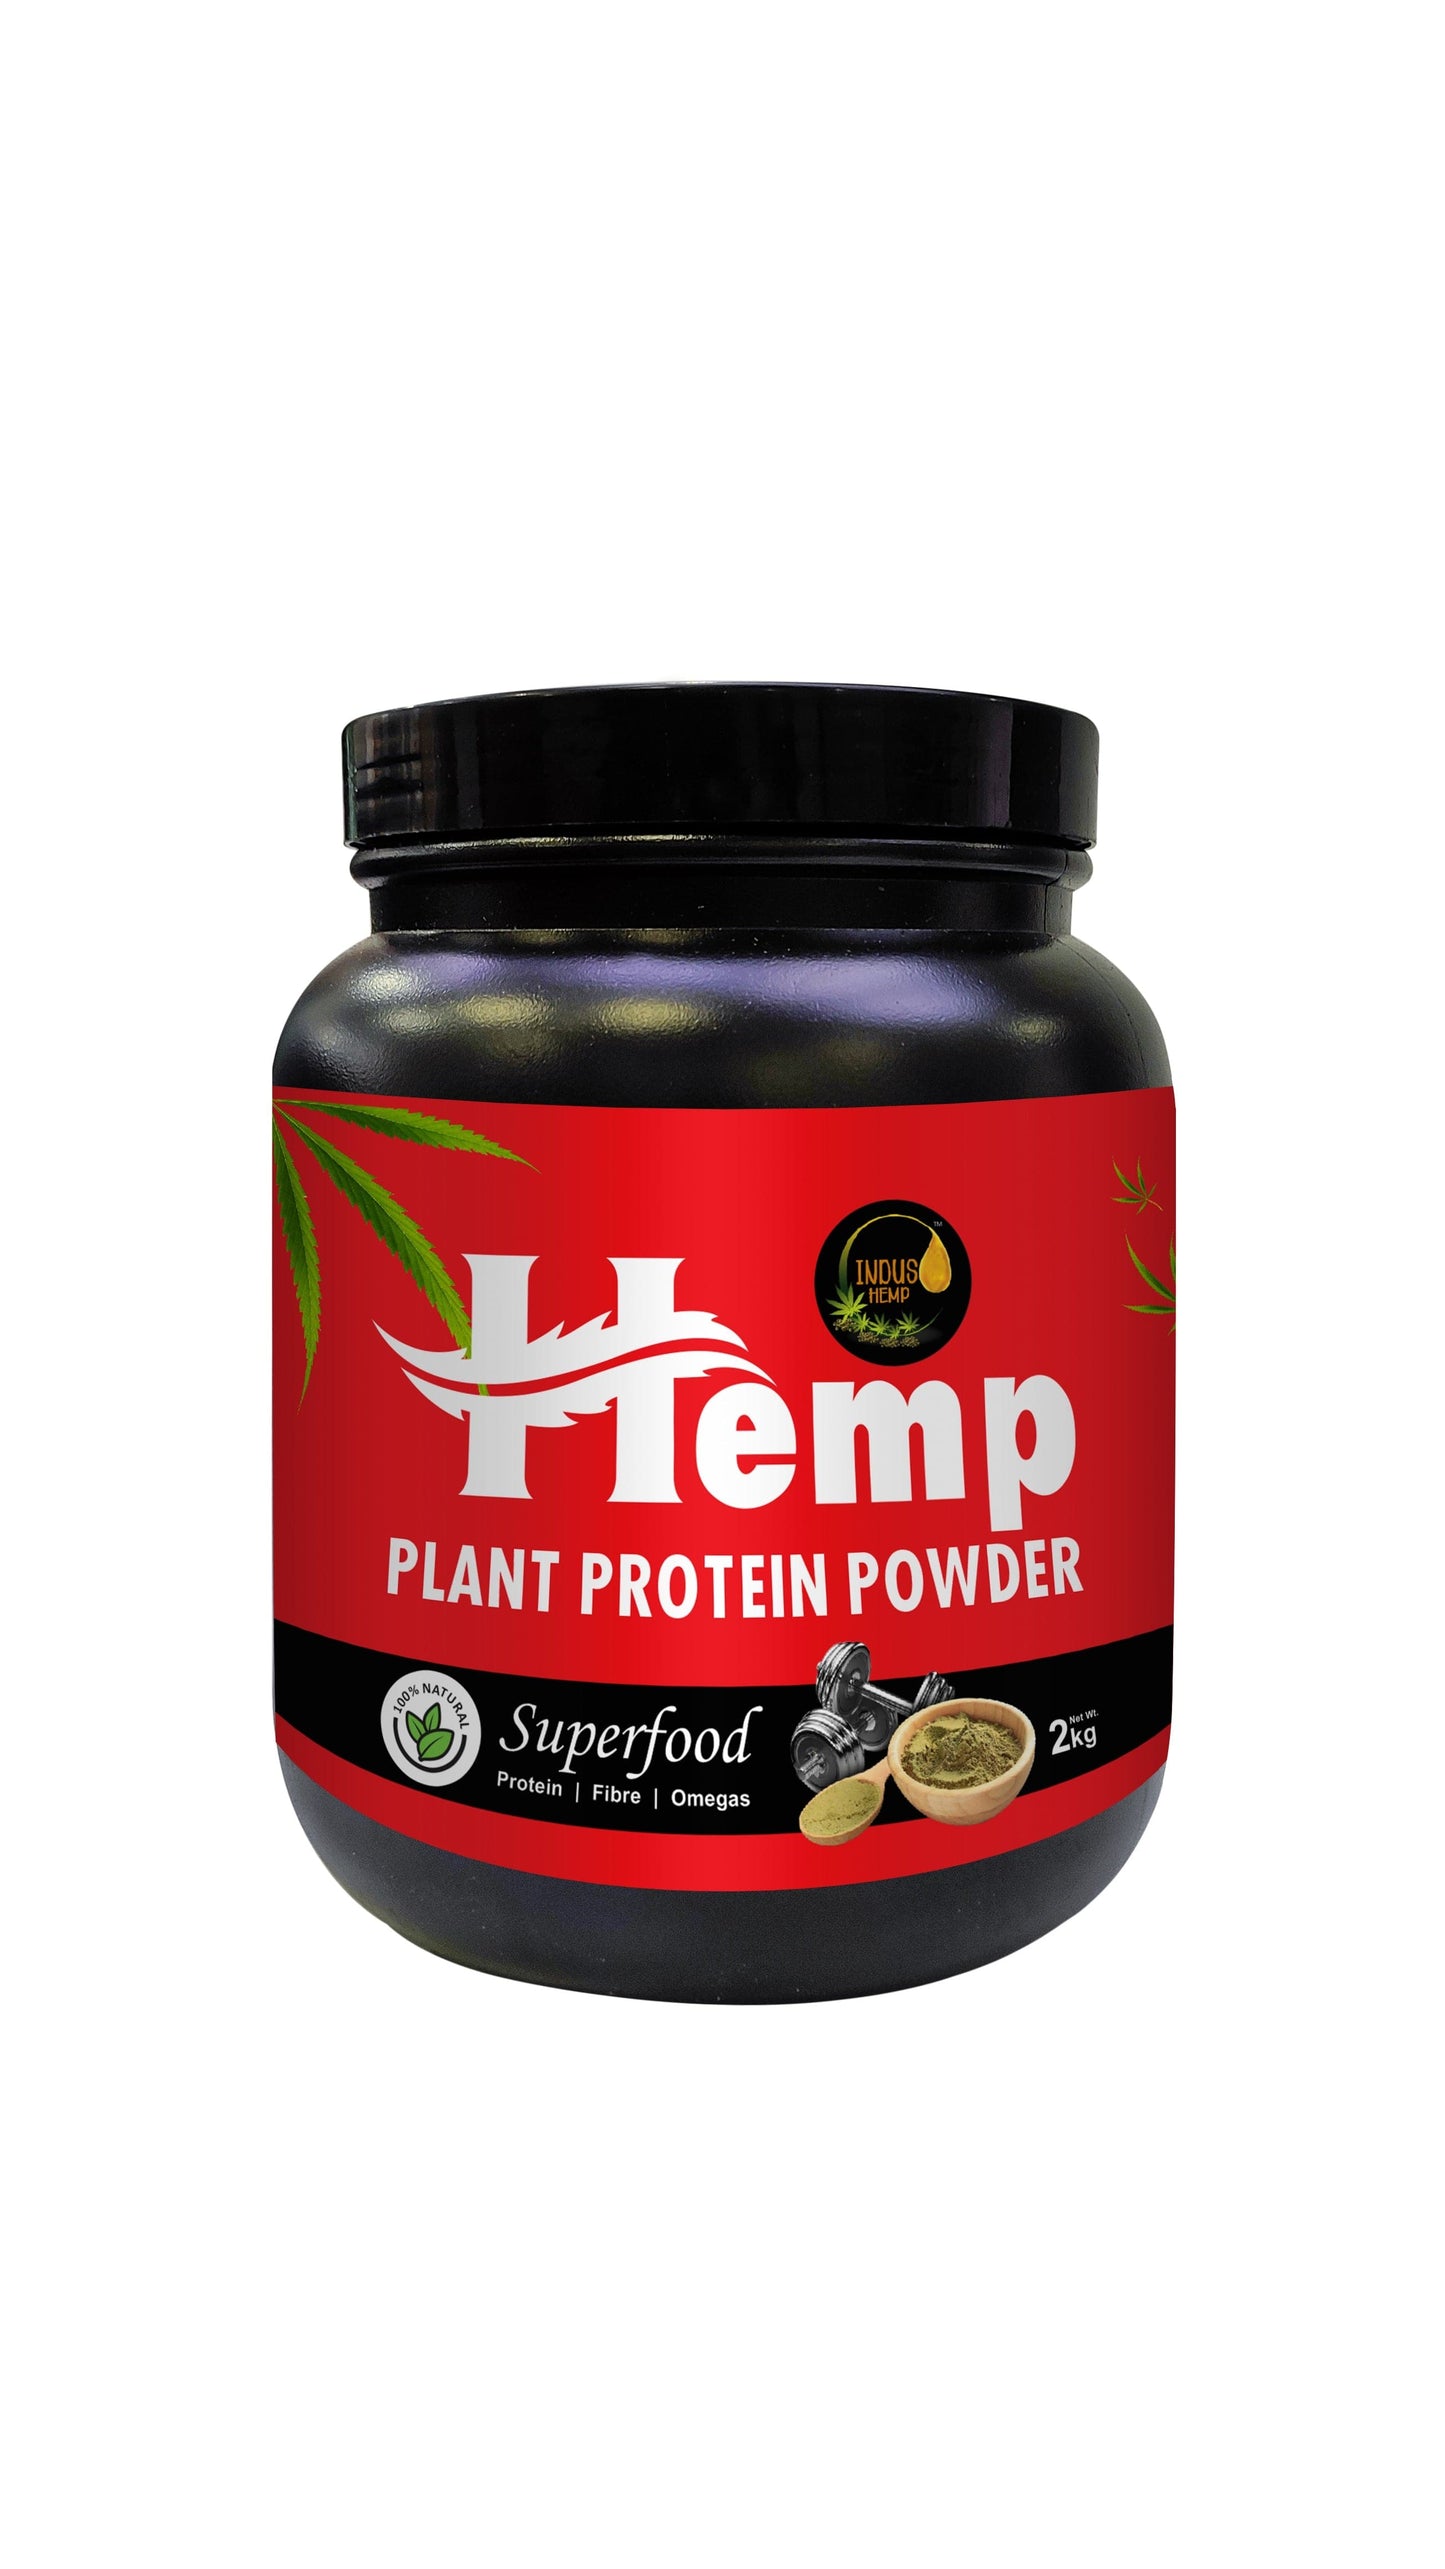  Indus Hemp Plant Based Vegan Hemp Protein Powder Online